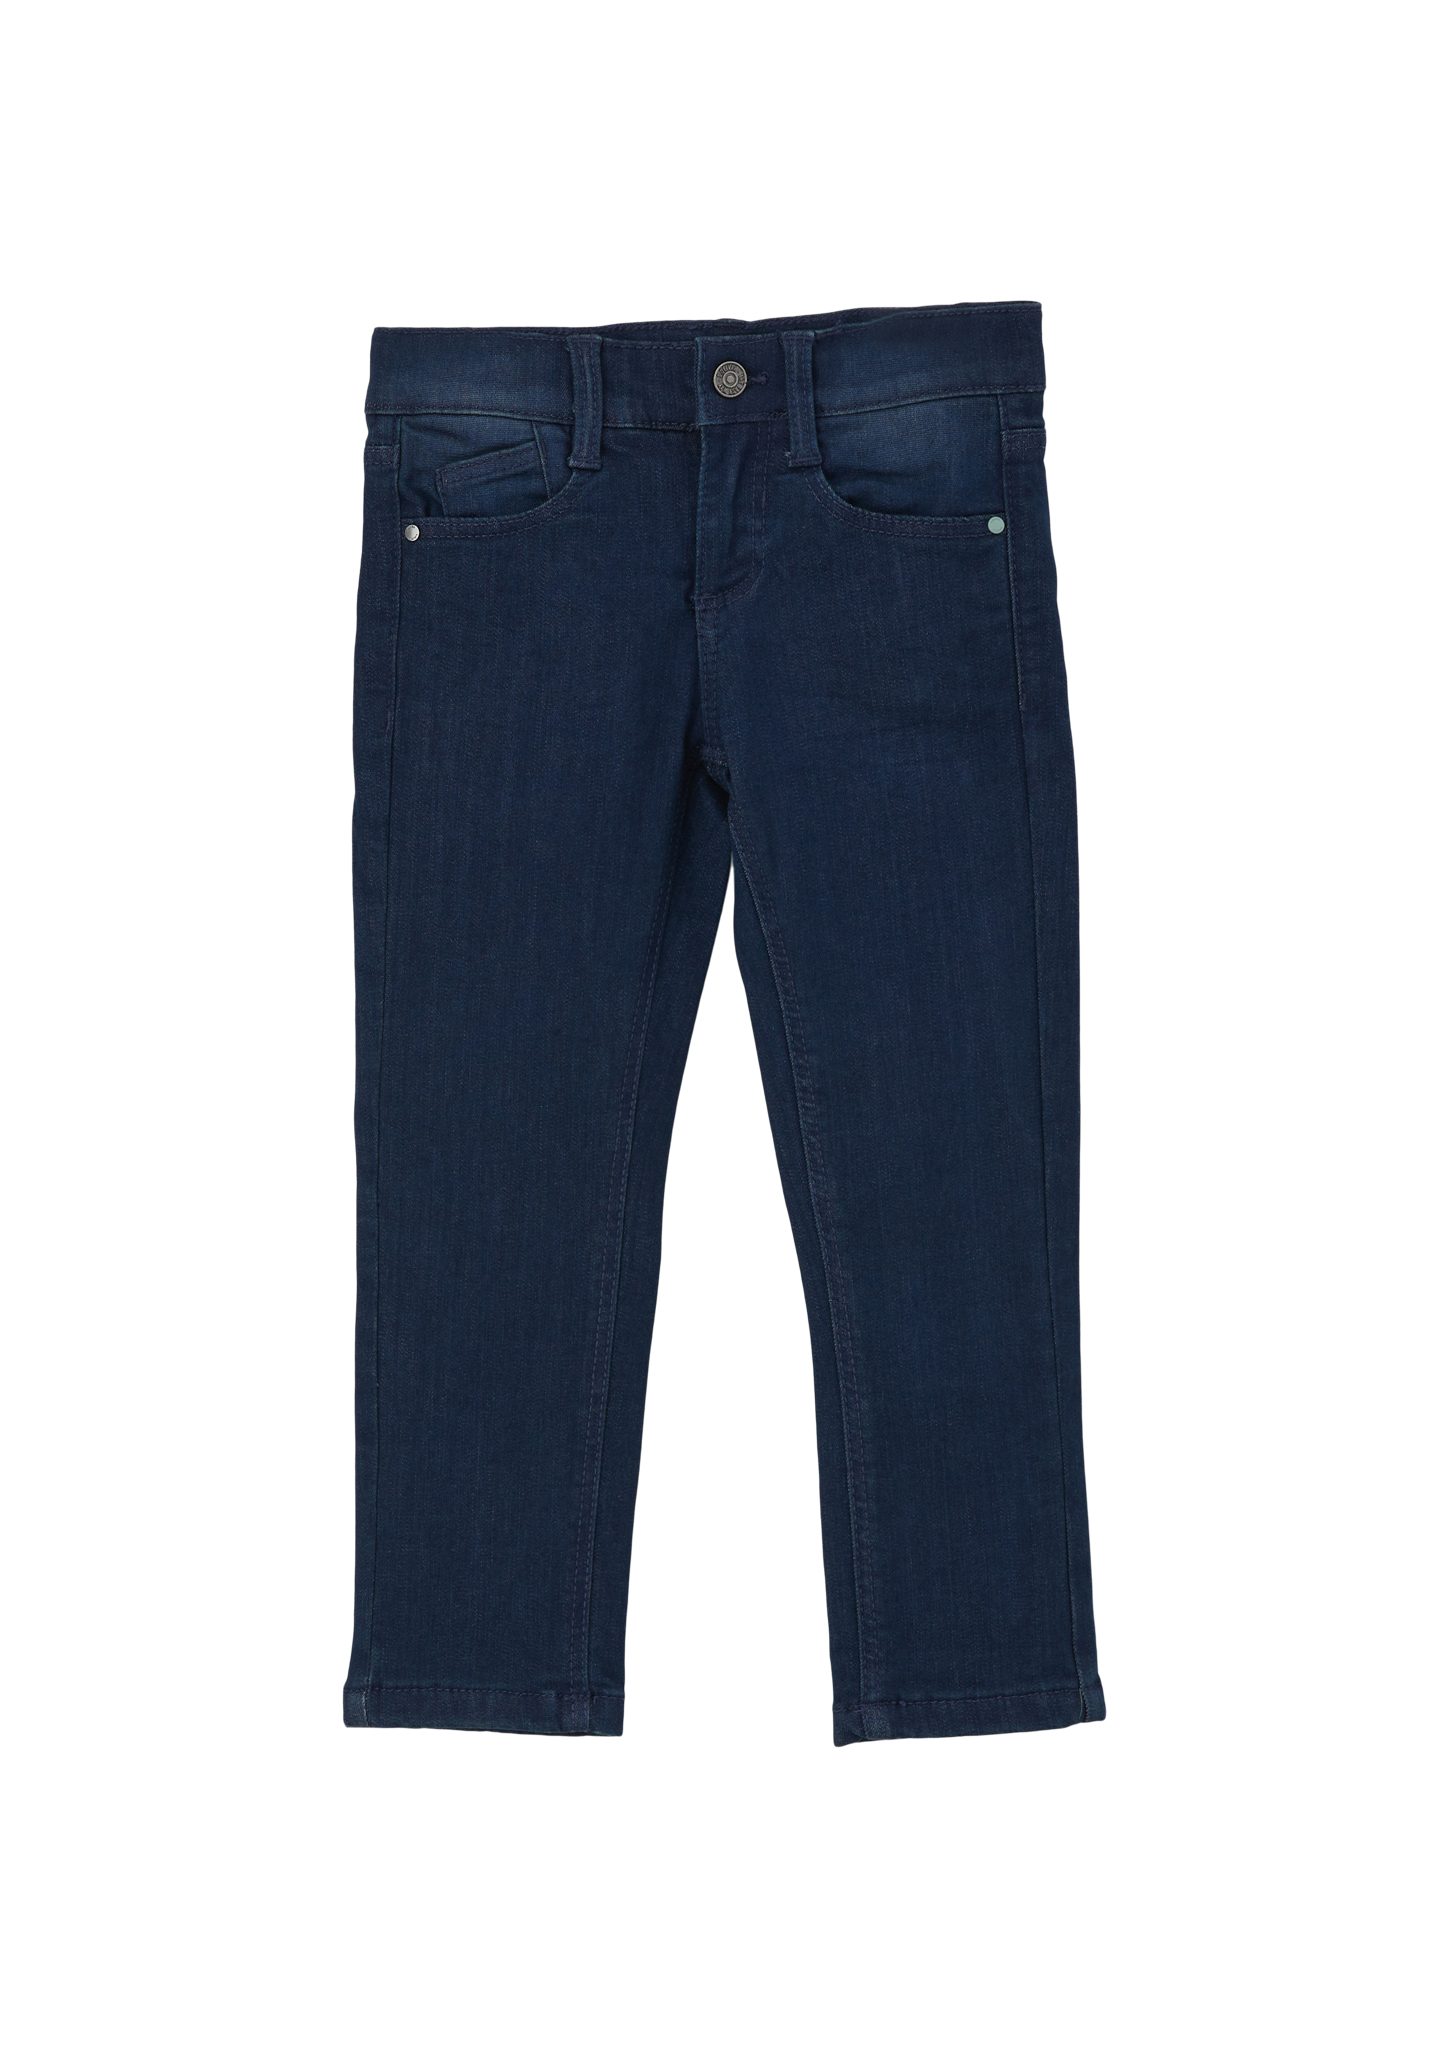 Waschung Rise Brad Leg s.Oliver / / Slim Fit Slim / 5-Pocket-Jeans Jeans Mid